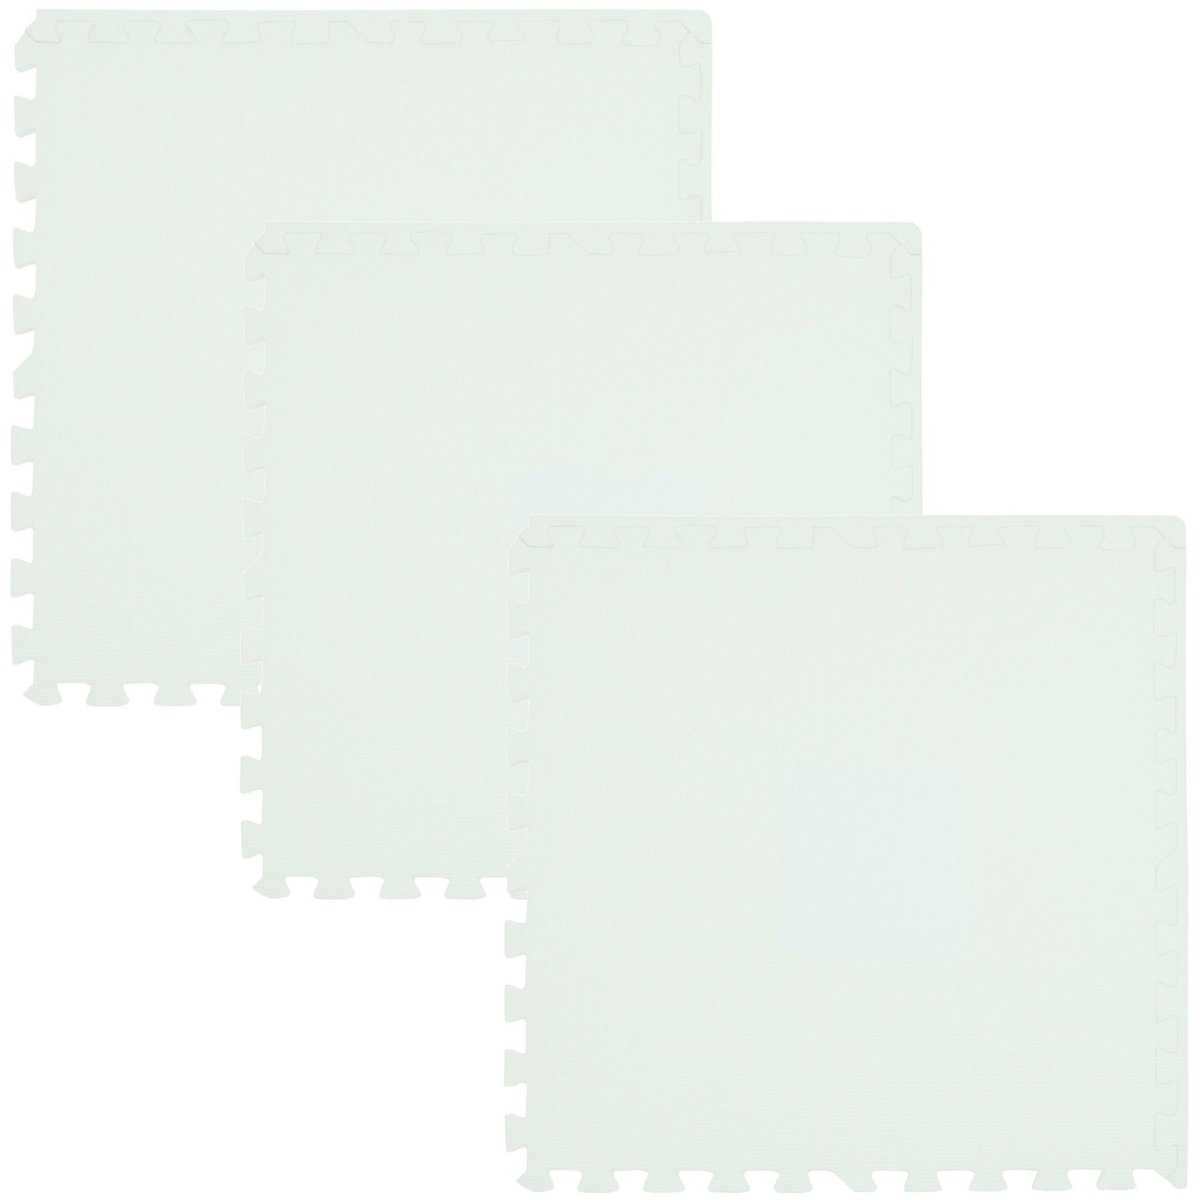 Humbi, Mata piankowa/Puzzle piankowe, Biały, 62x62 cm, 3 szt.